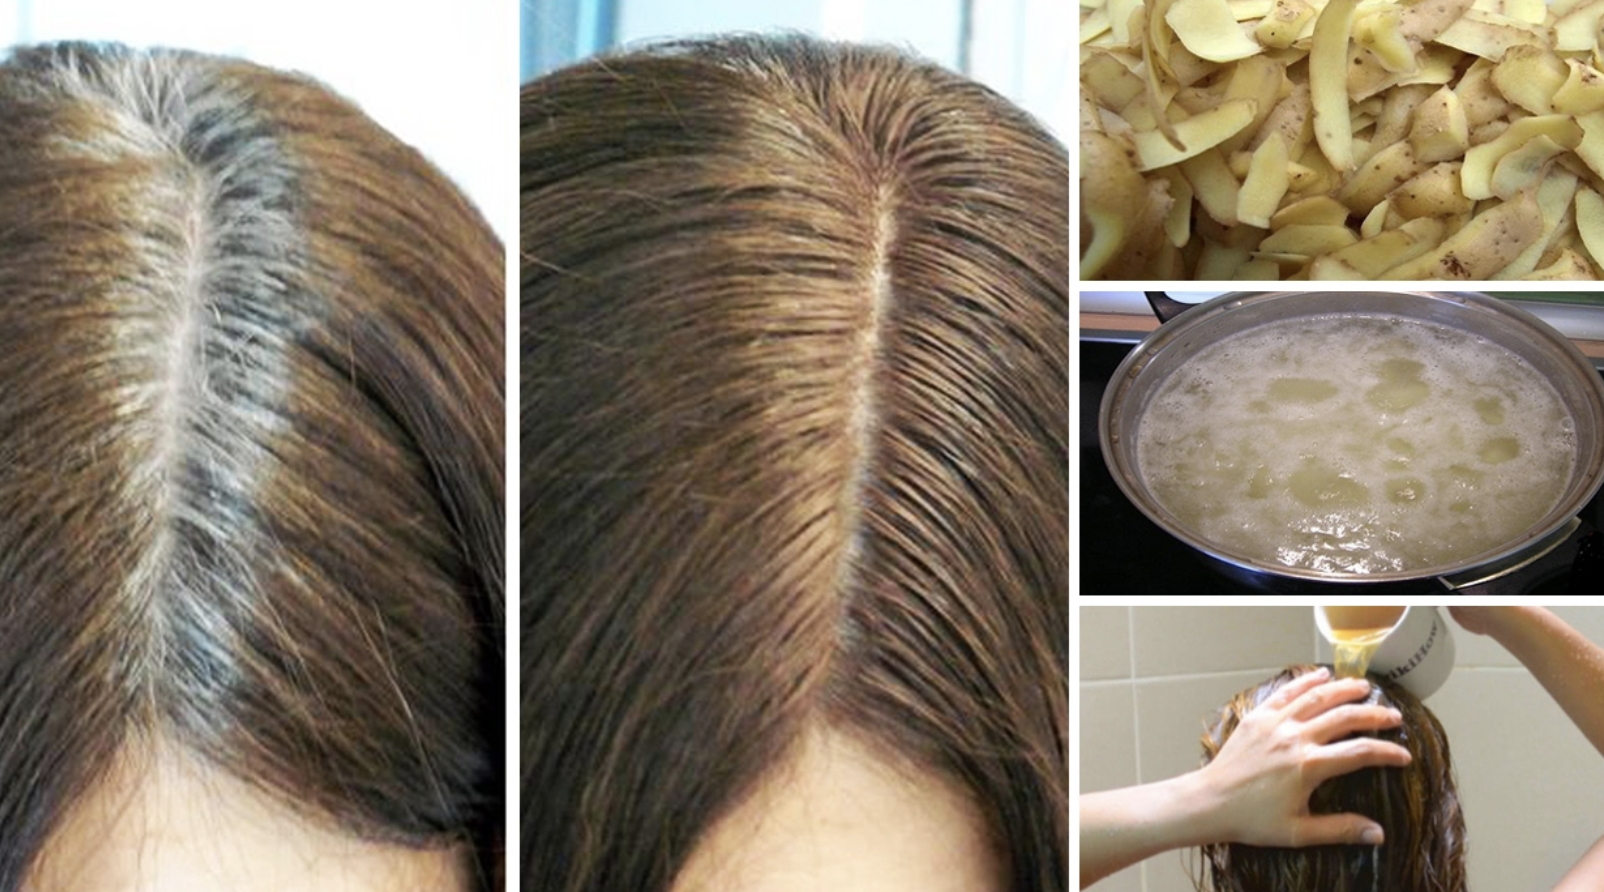 Use potato peels to get rid of grey hair